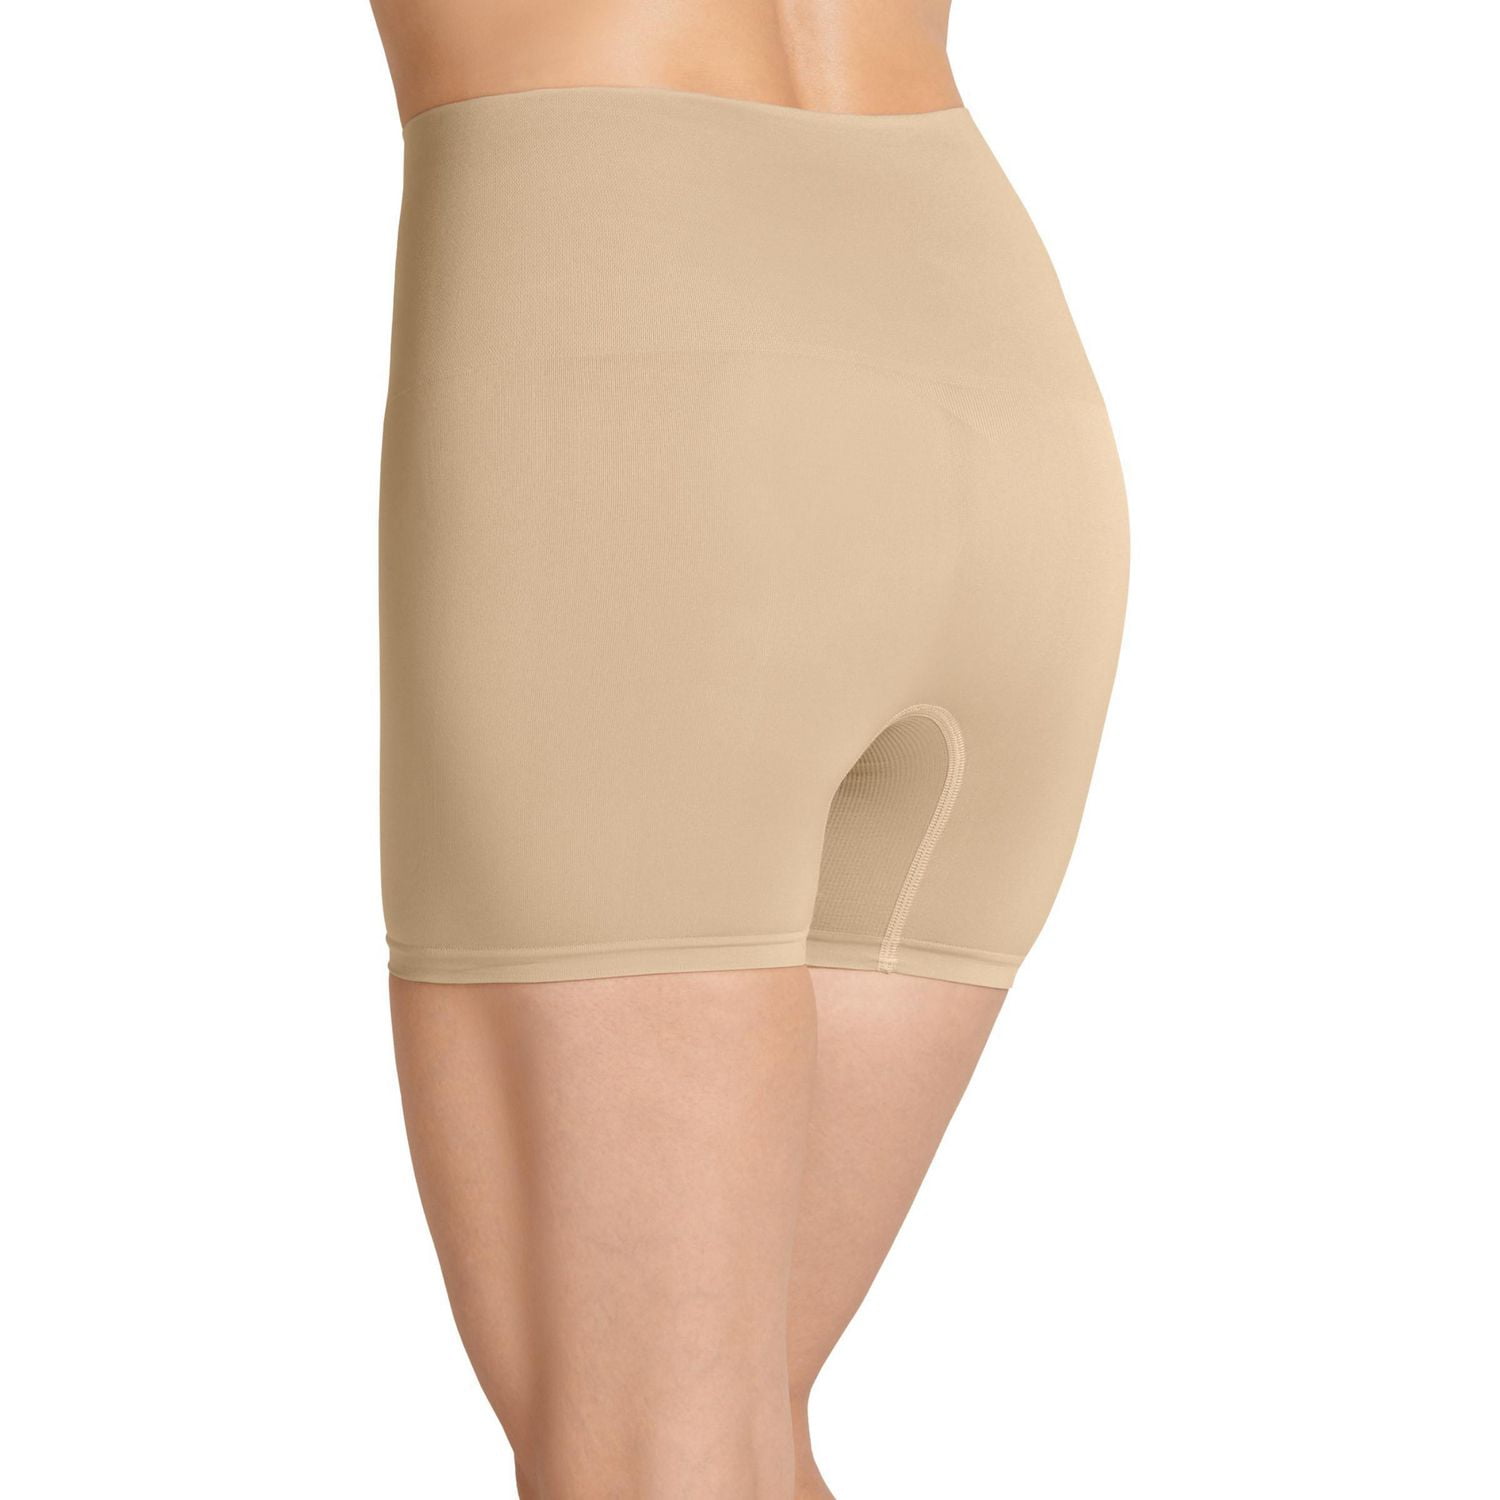 JKY by Jockey 61683 Women's Slimming Shorts Size S - Sandy